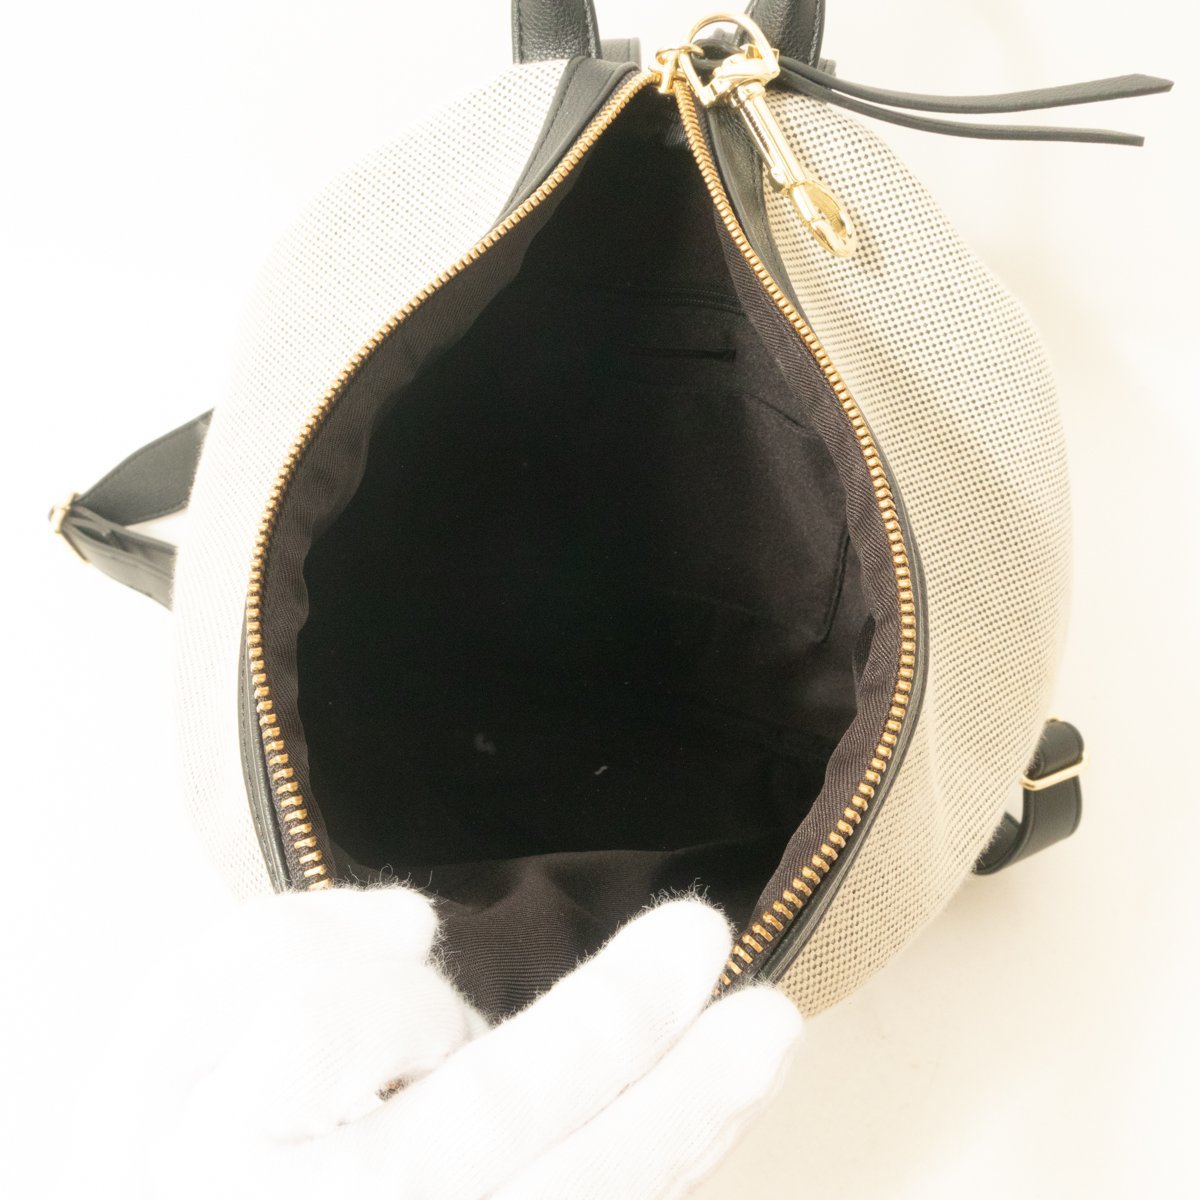 BARNYARDSTORM van yard storm rucksack black black beige Gold fake leather lady's simple casual bag bag 